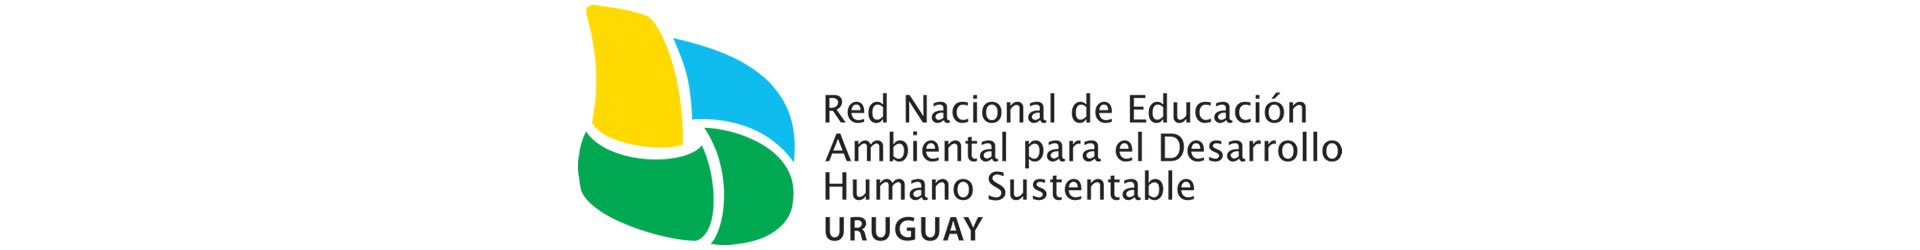 EXPO #UruguaySostenible